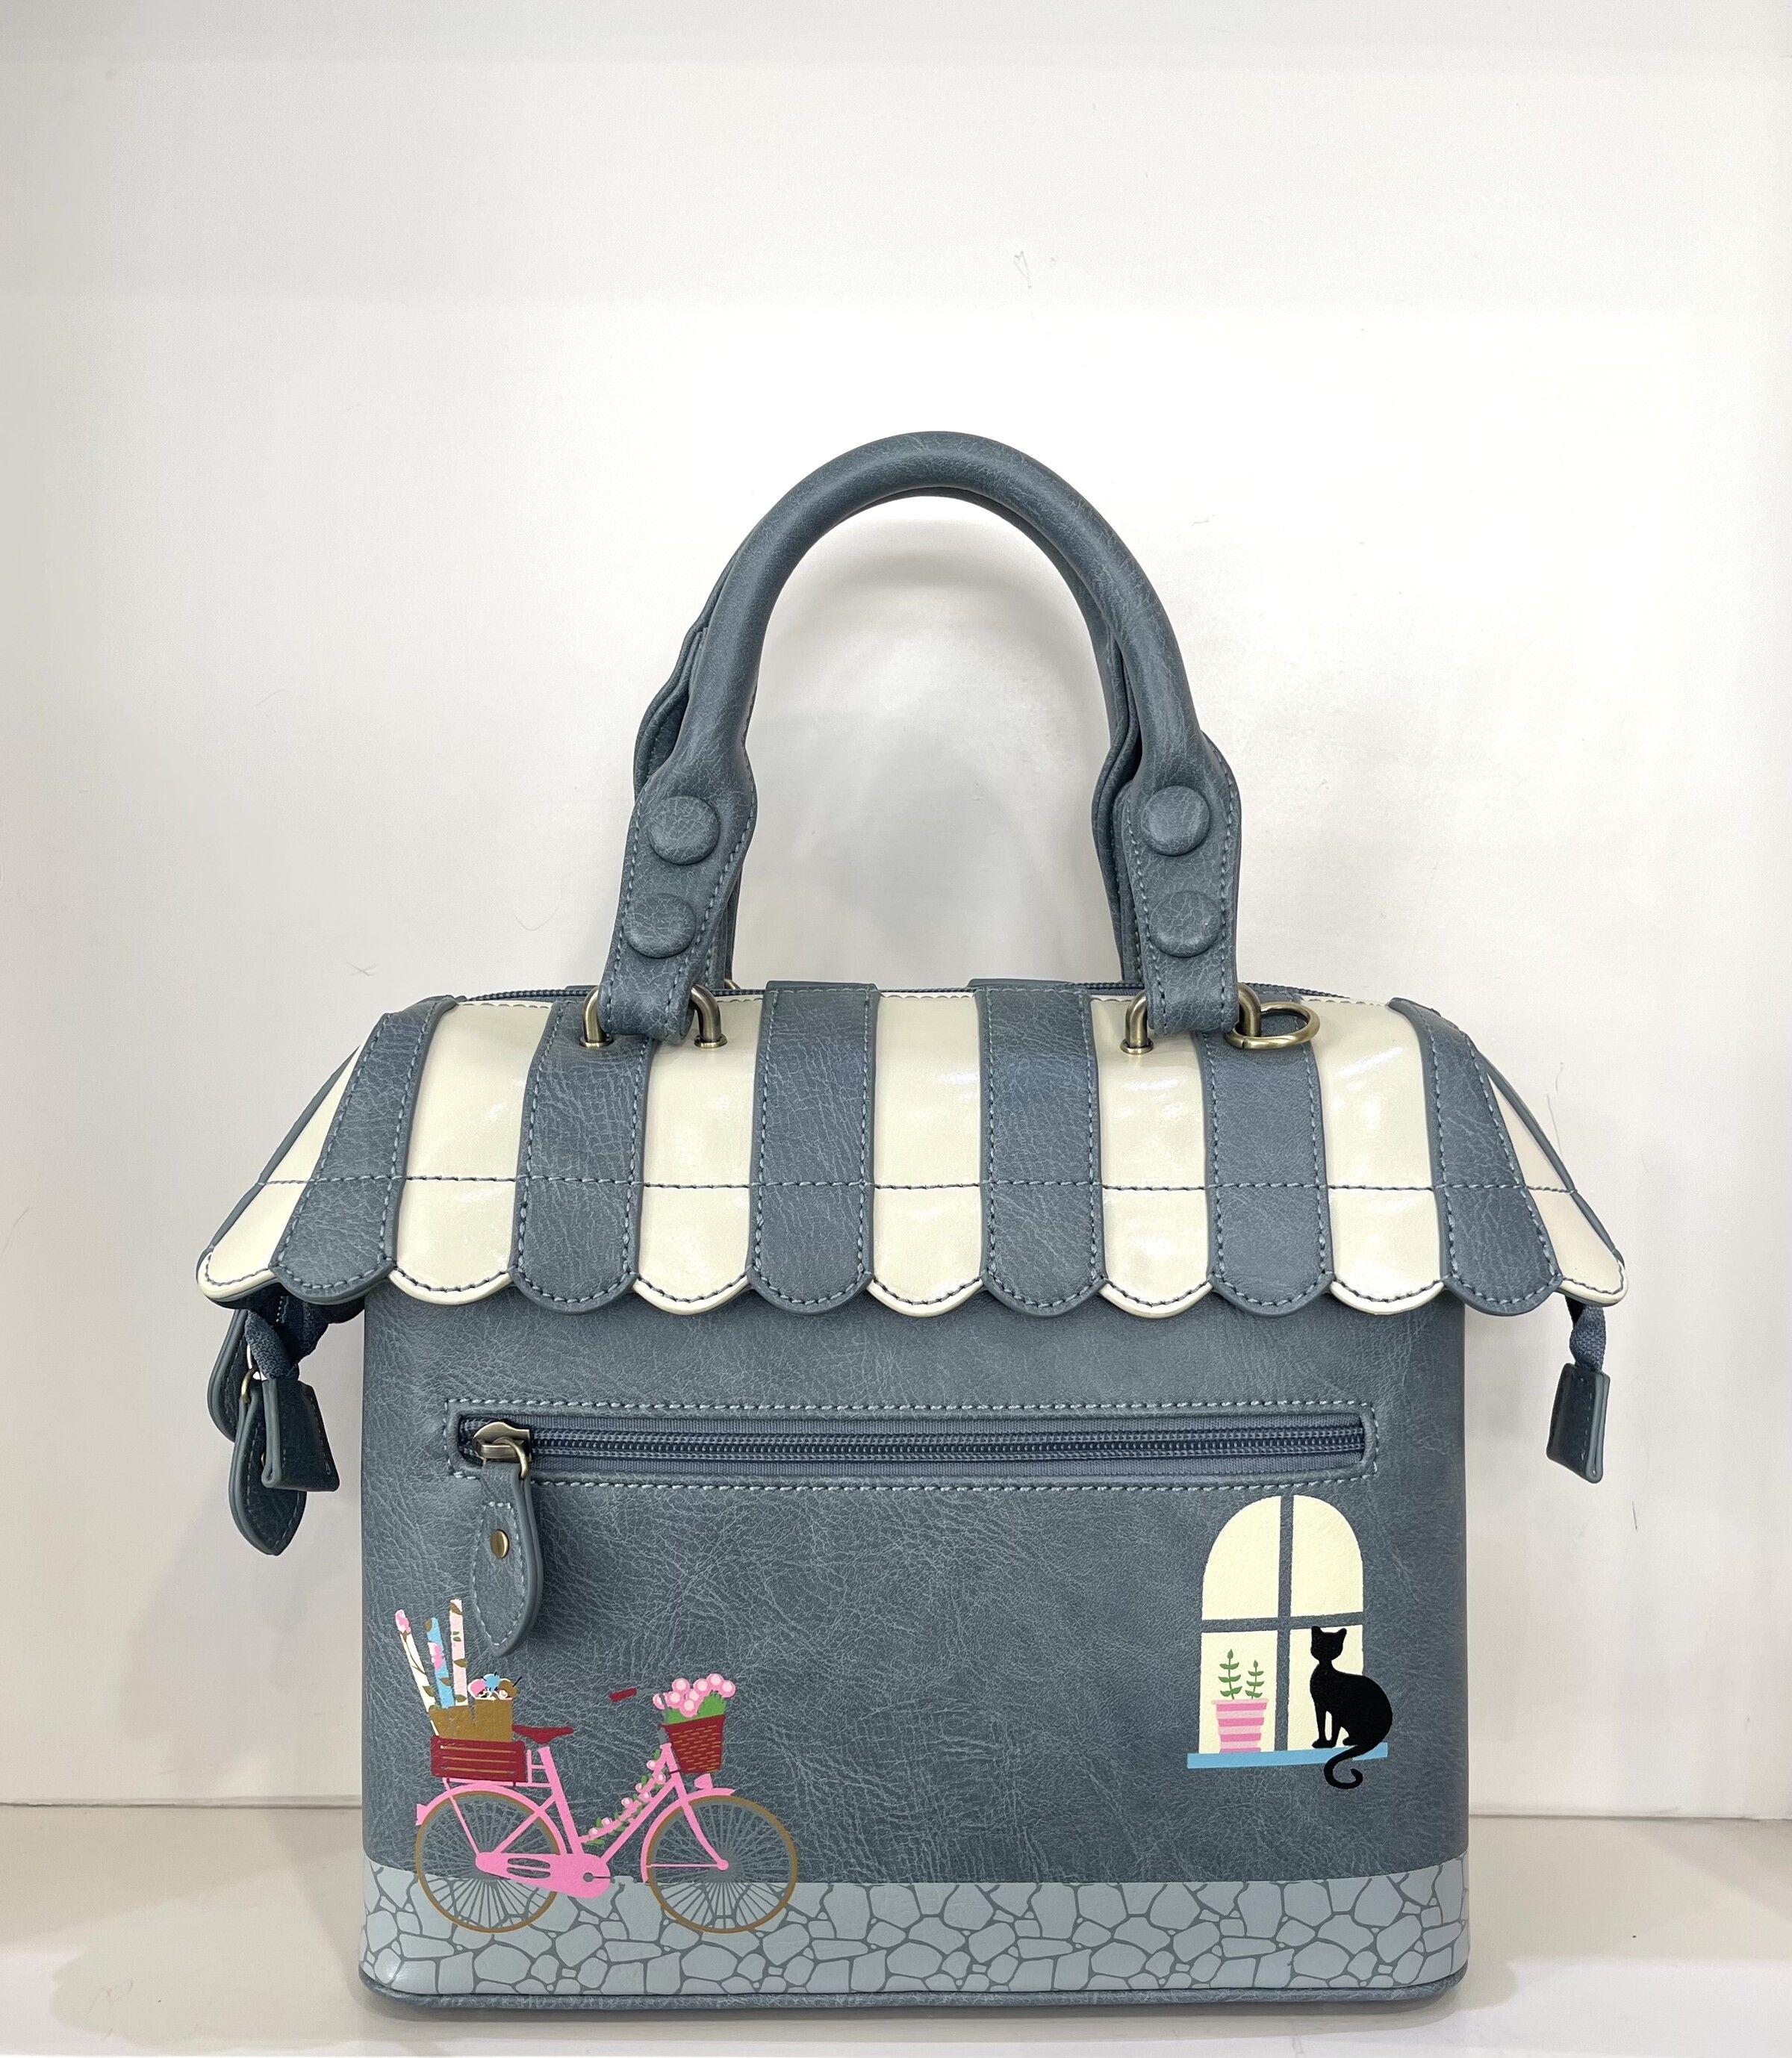 SALE - (Was $349) Vendula Sewing Shop Grab Bag, Handbag | Beija Flor Bags